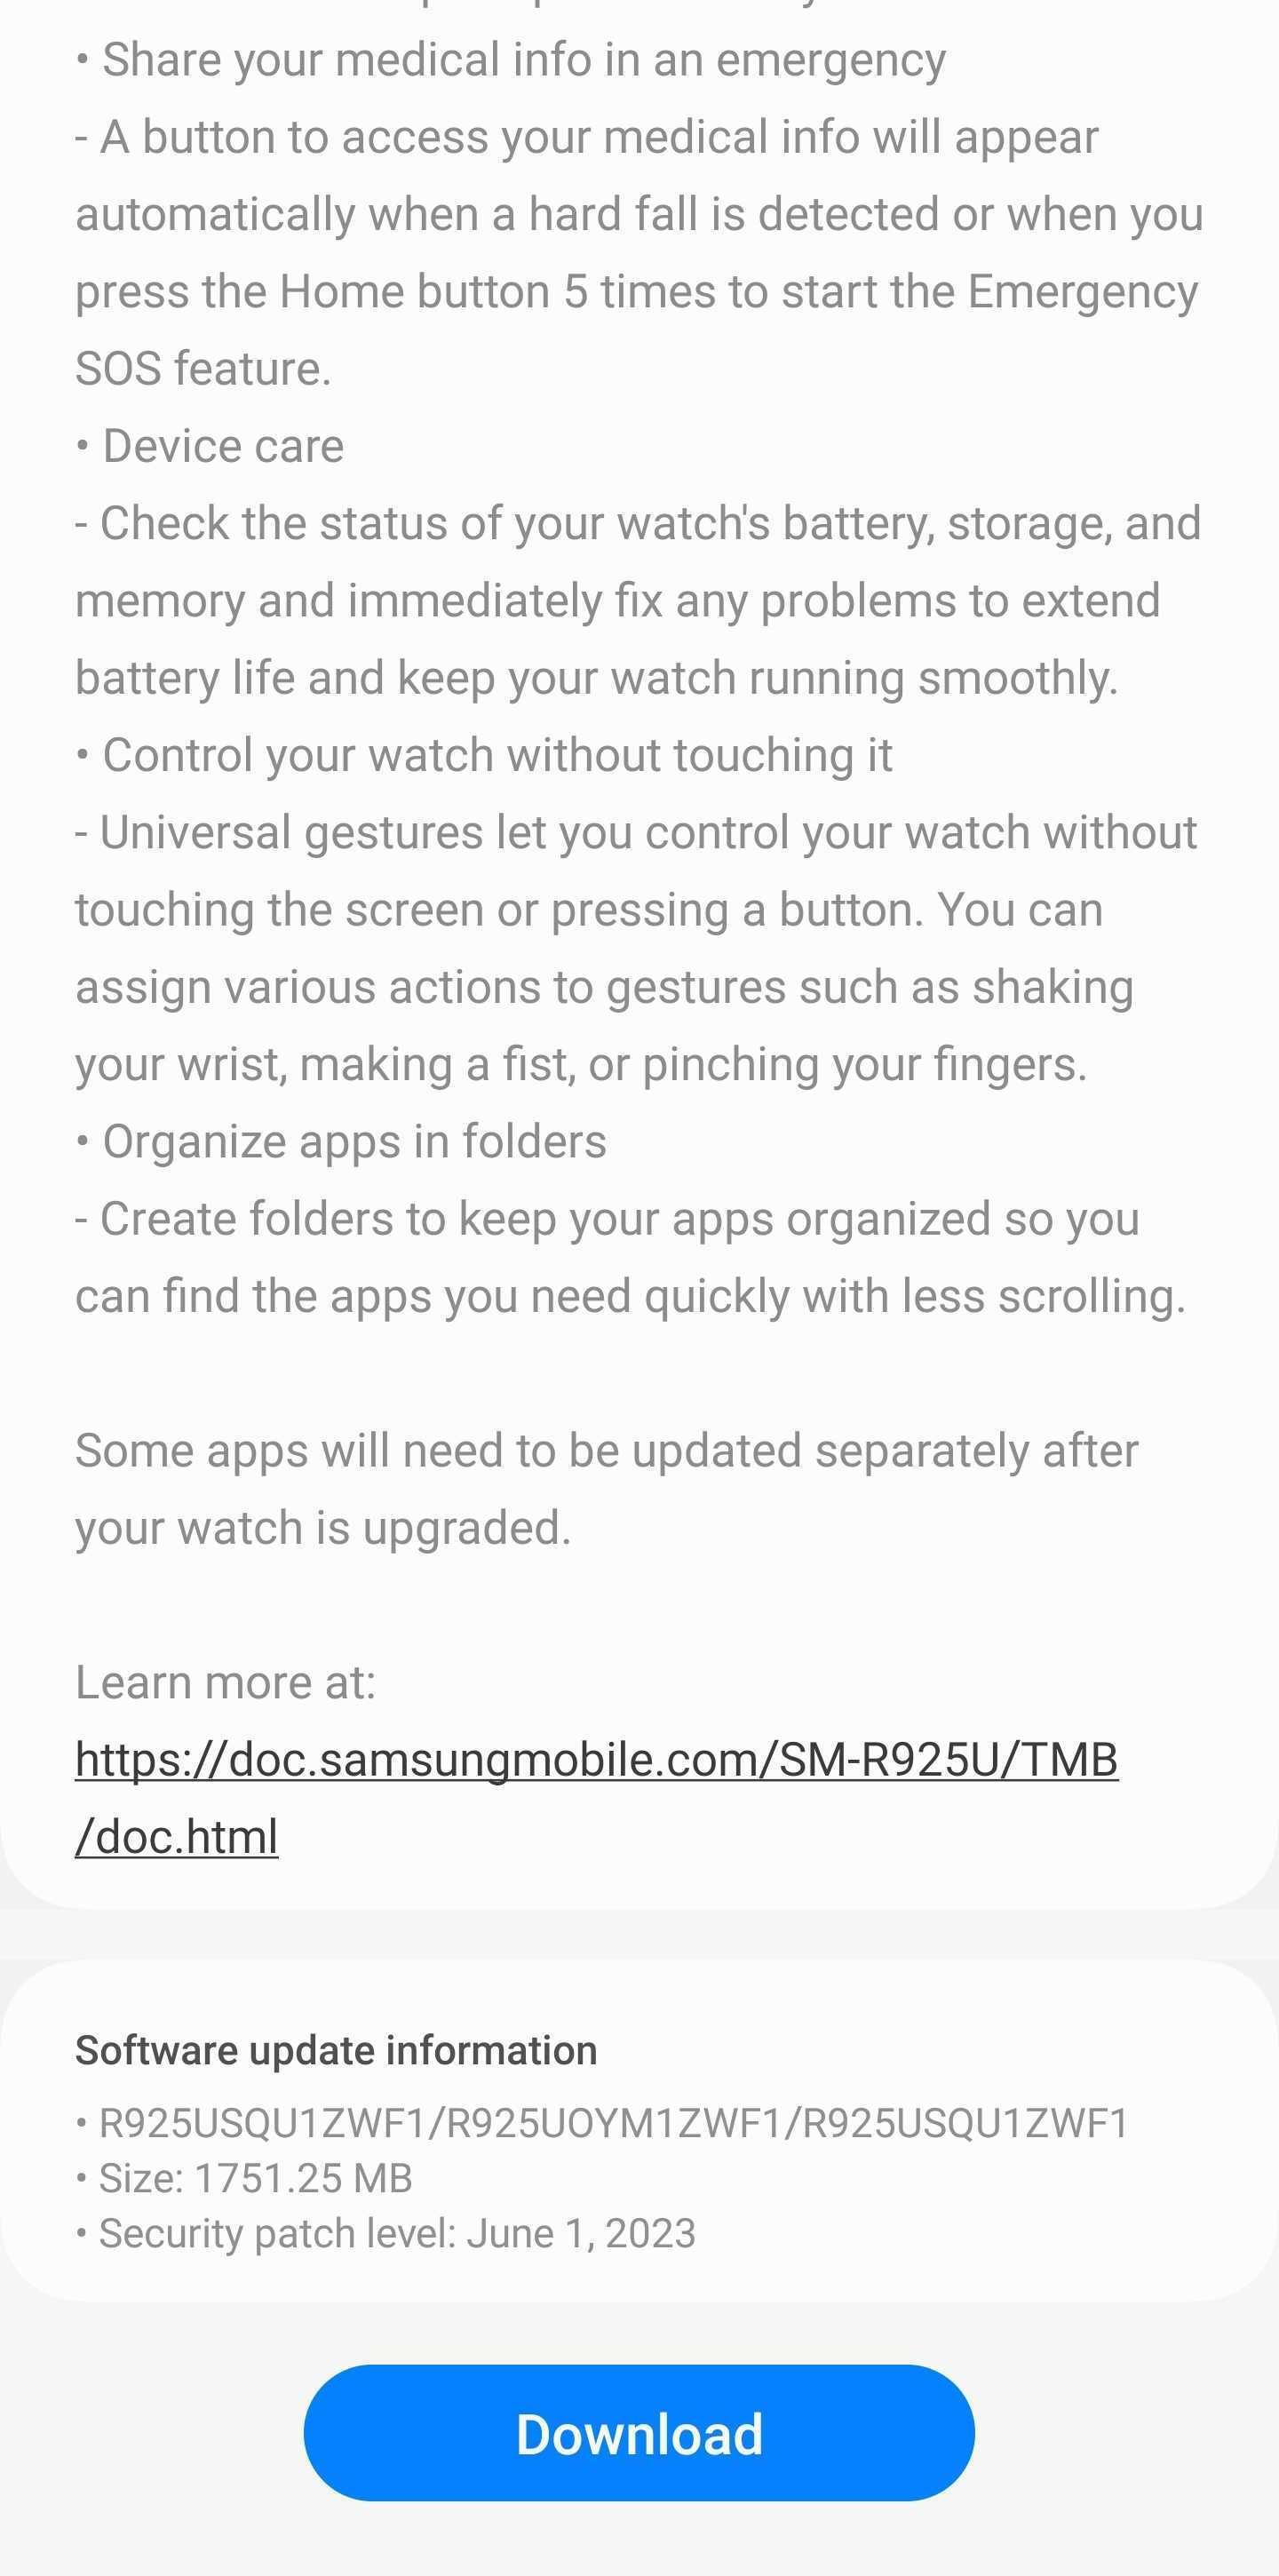 Samsung One UI 5 watch beta release notes